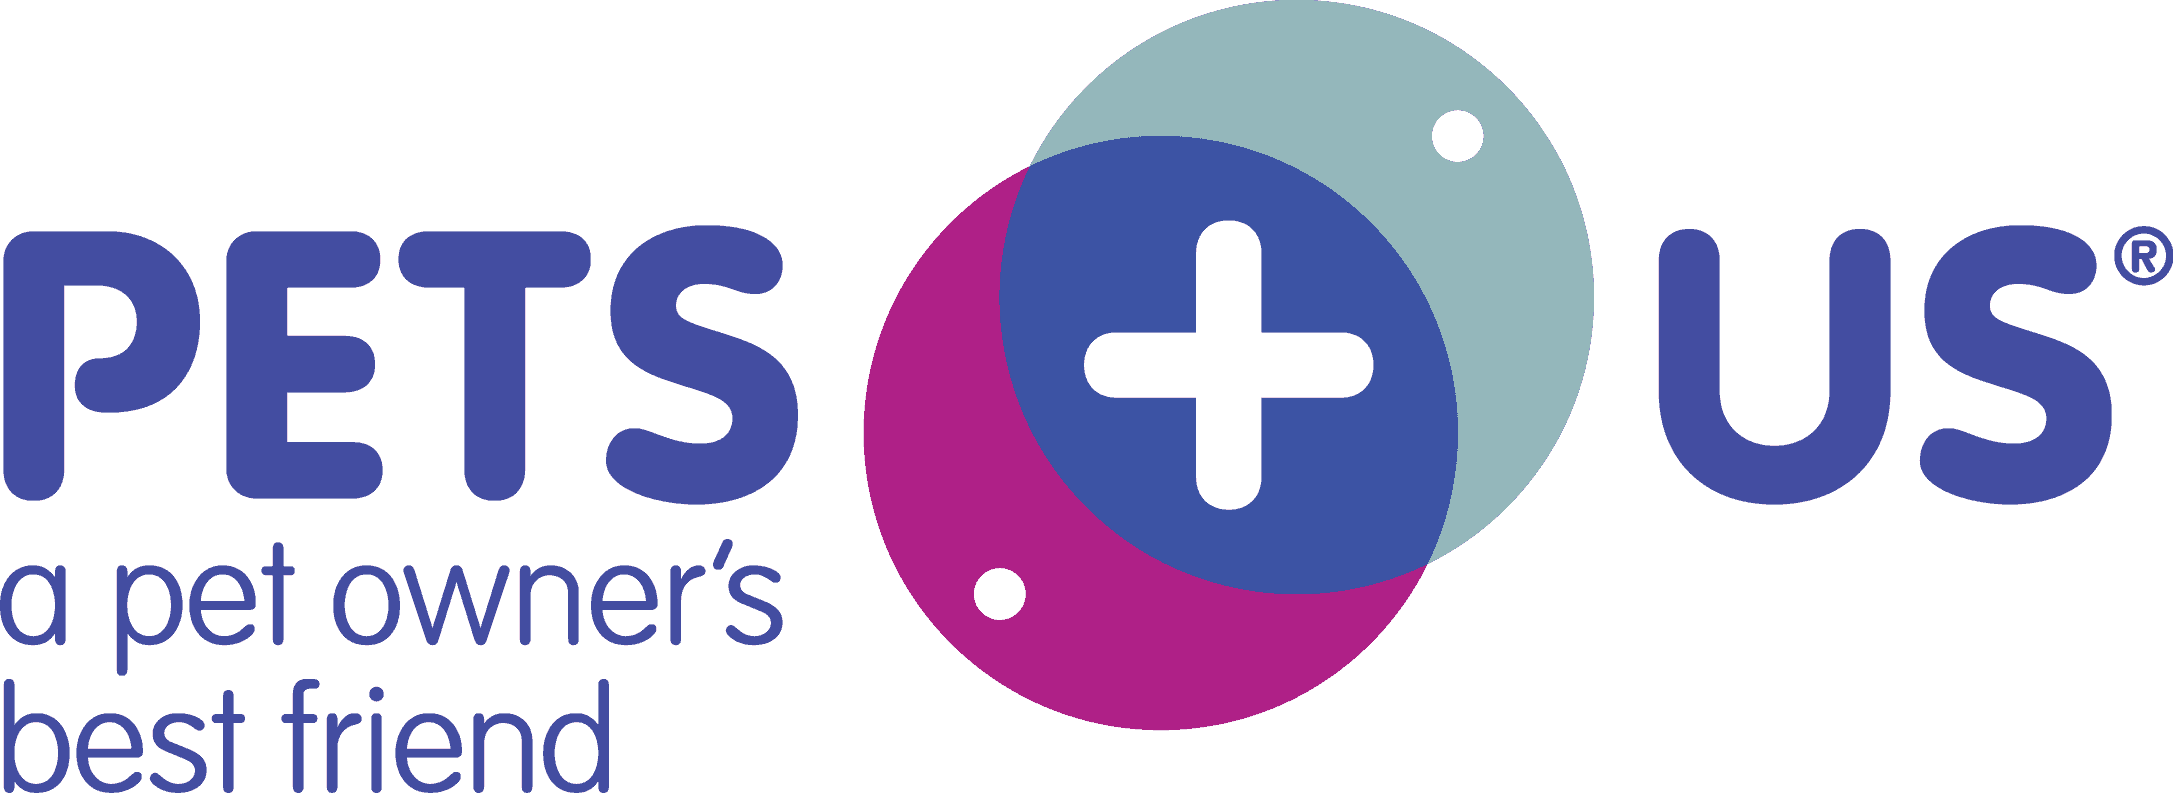 PetsPlusUs Logo